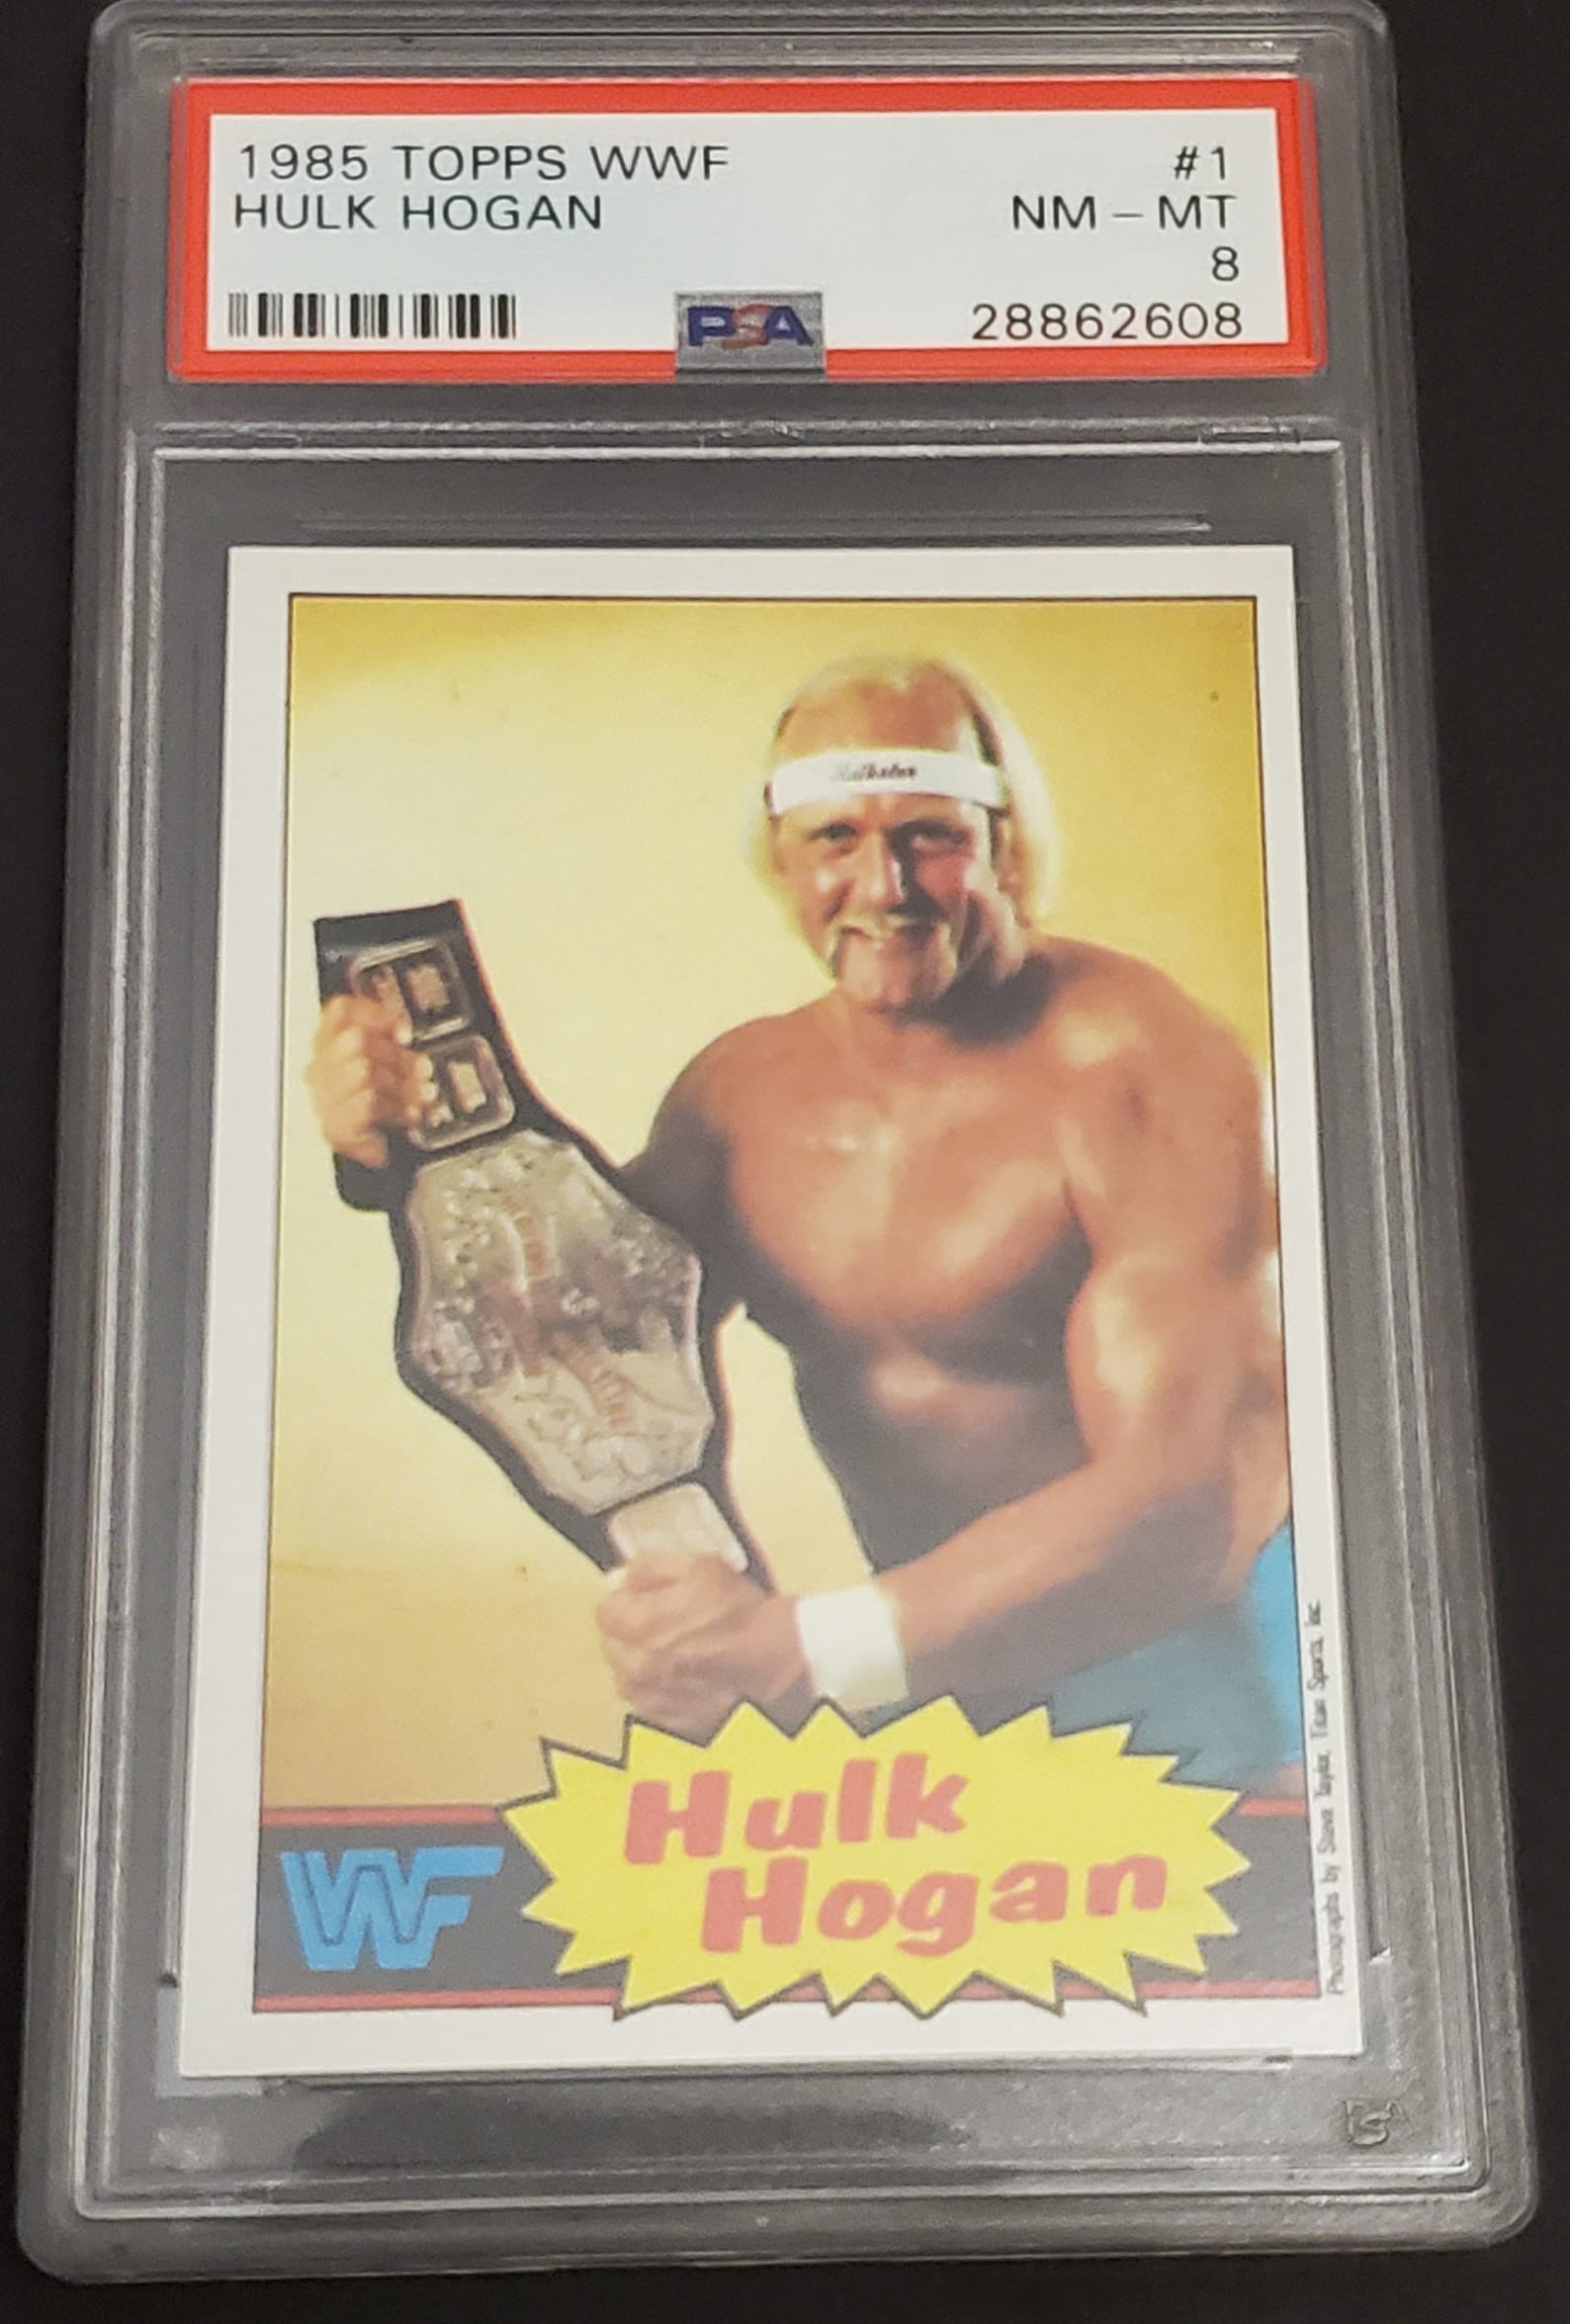 1985 Topps WWF Hulk Hogan Rookie Card PSA NR Mint 8 | Etsy